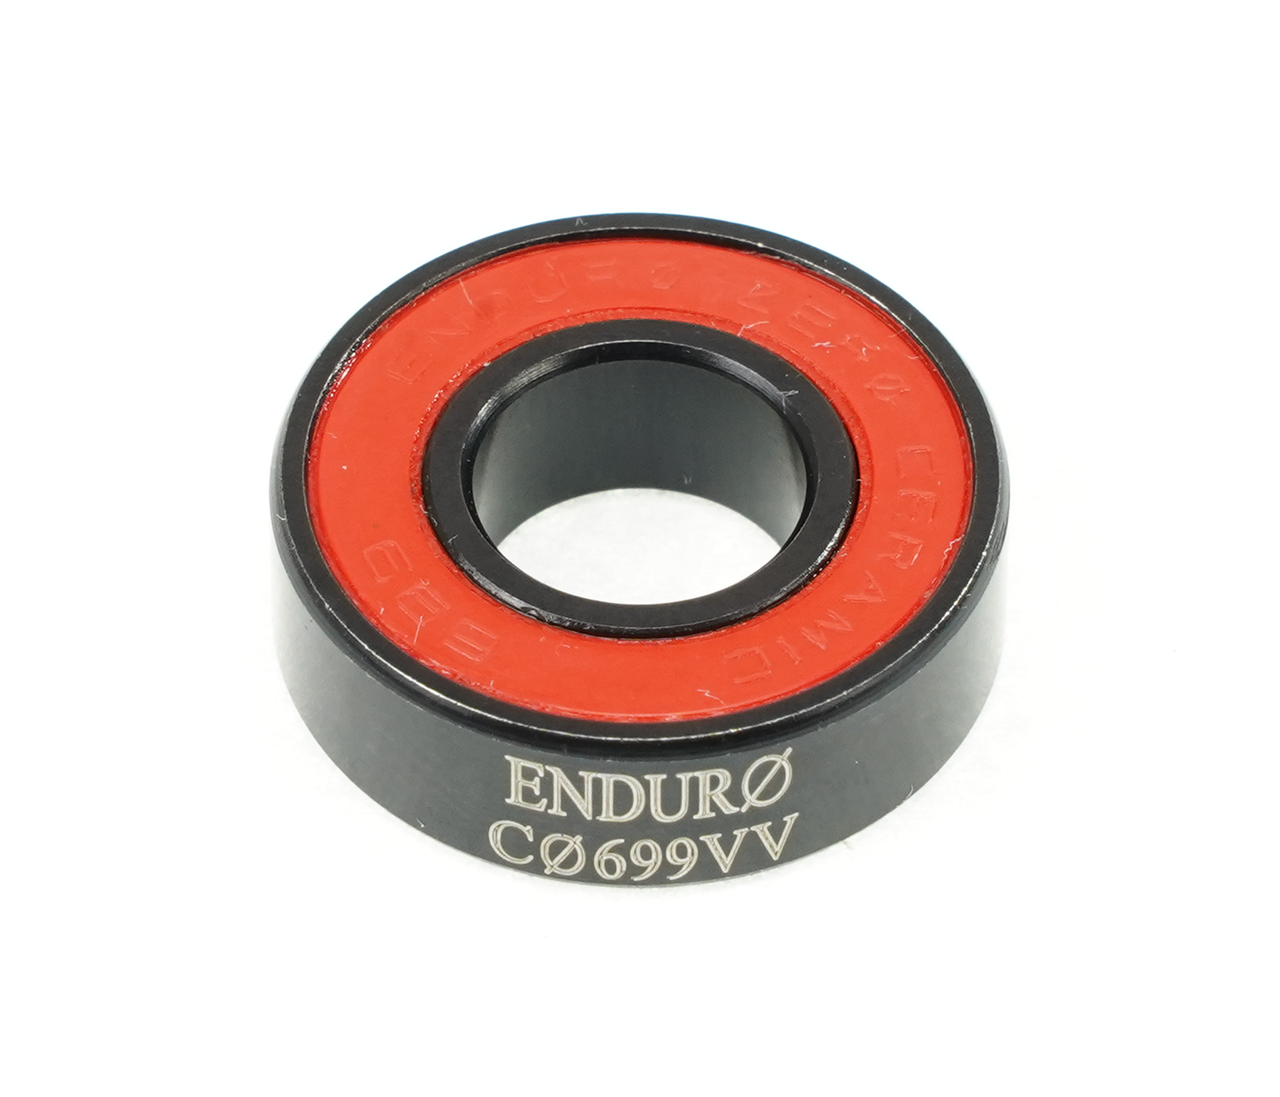 Enduro CO 699 VV - Enduro Zero, Black-Oxide, Ceramic Hybrid, ABEC-5, Radial Bearing (C3 Clearance) - 9mm x 20mm x 6mm